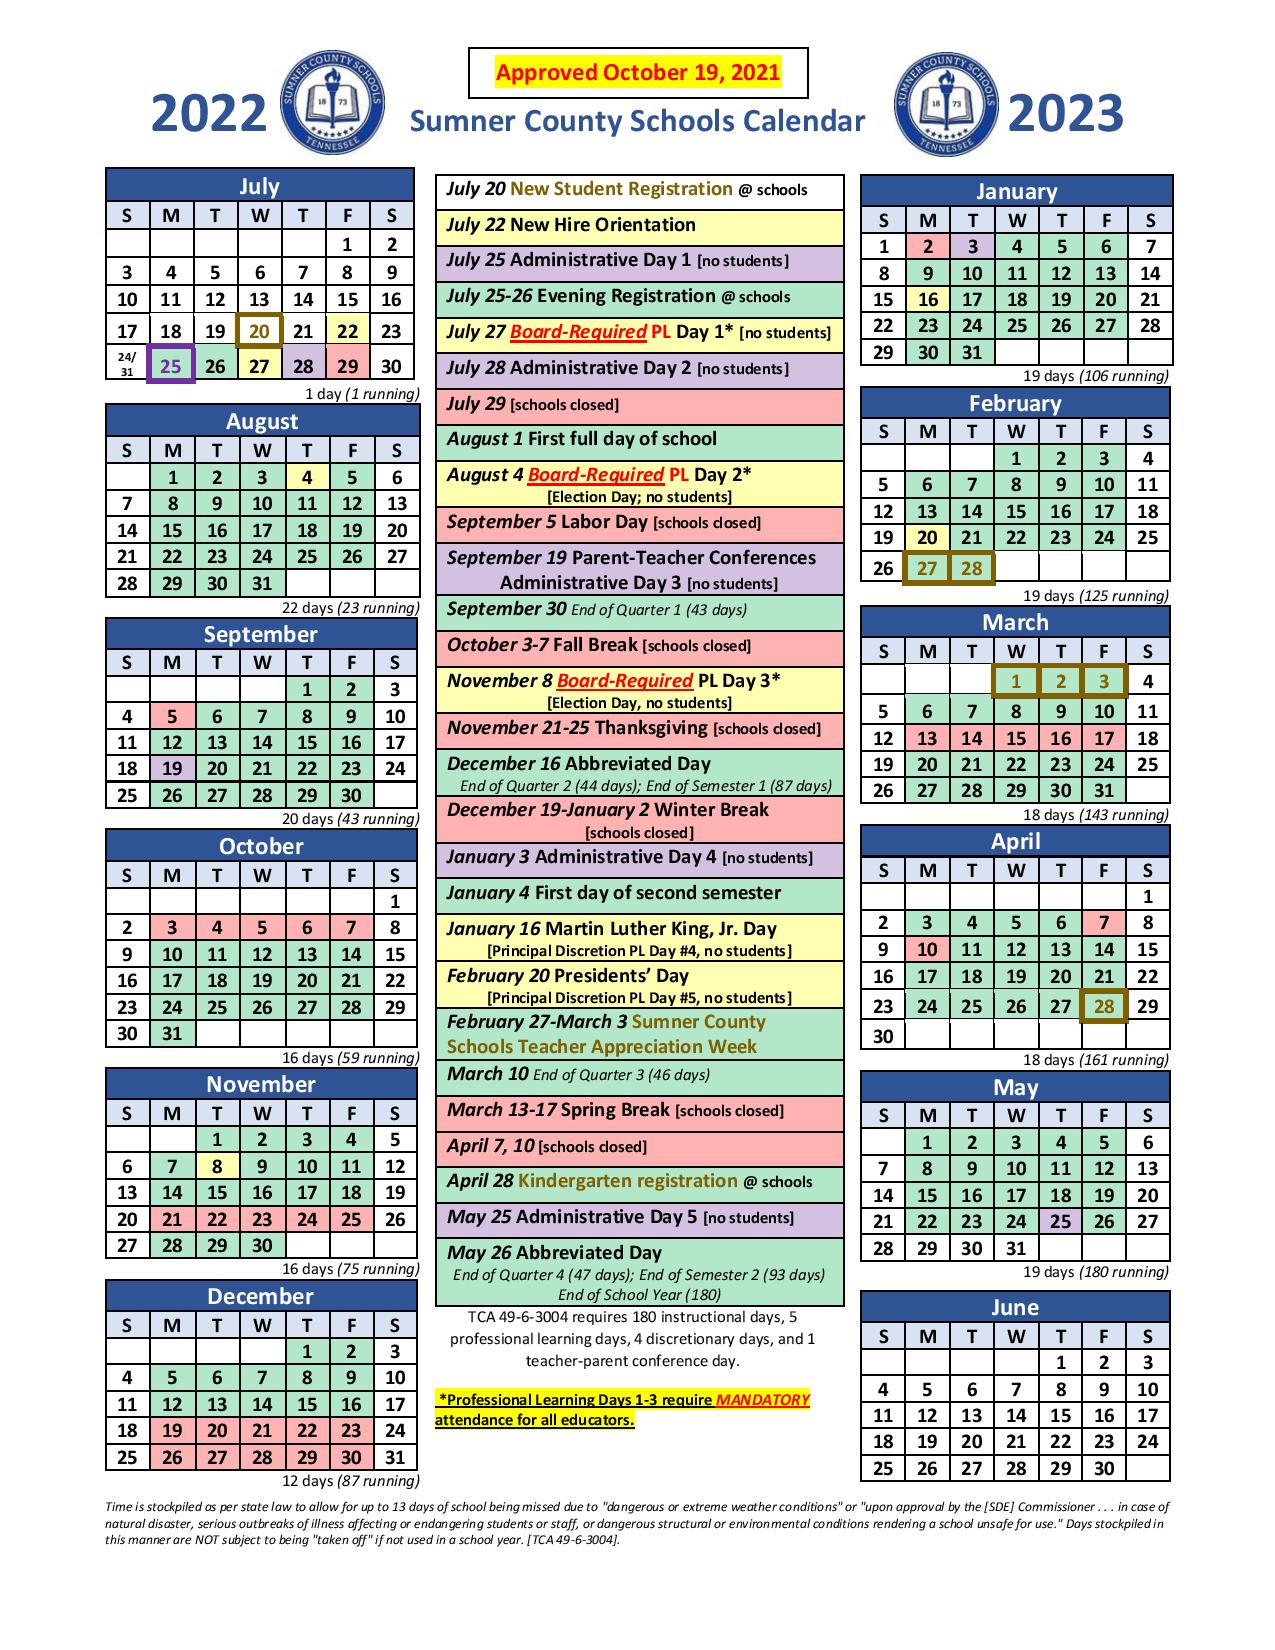 Sumner County School Calendar Holidays 2022-2023